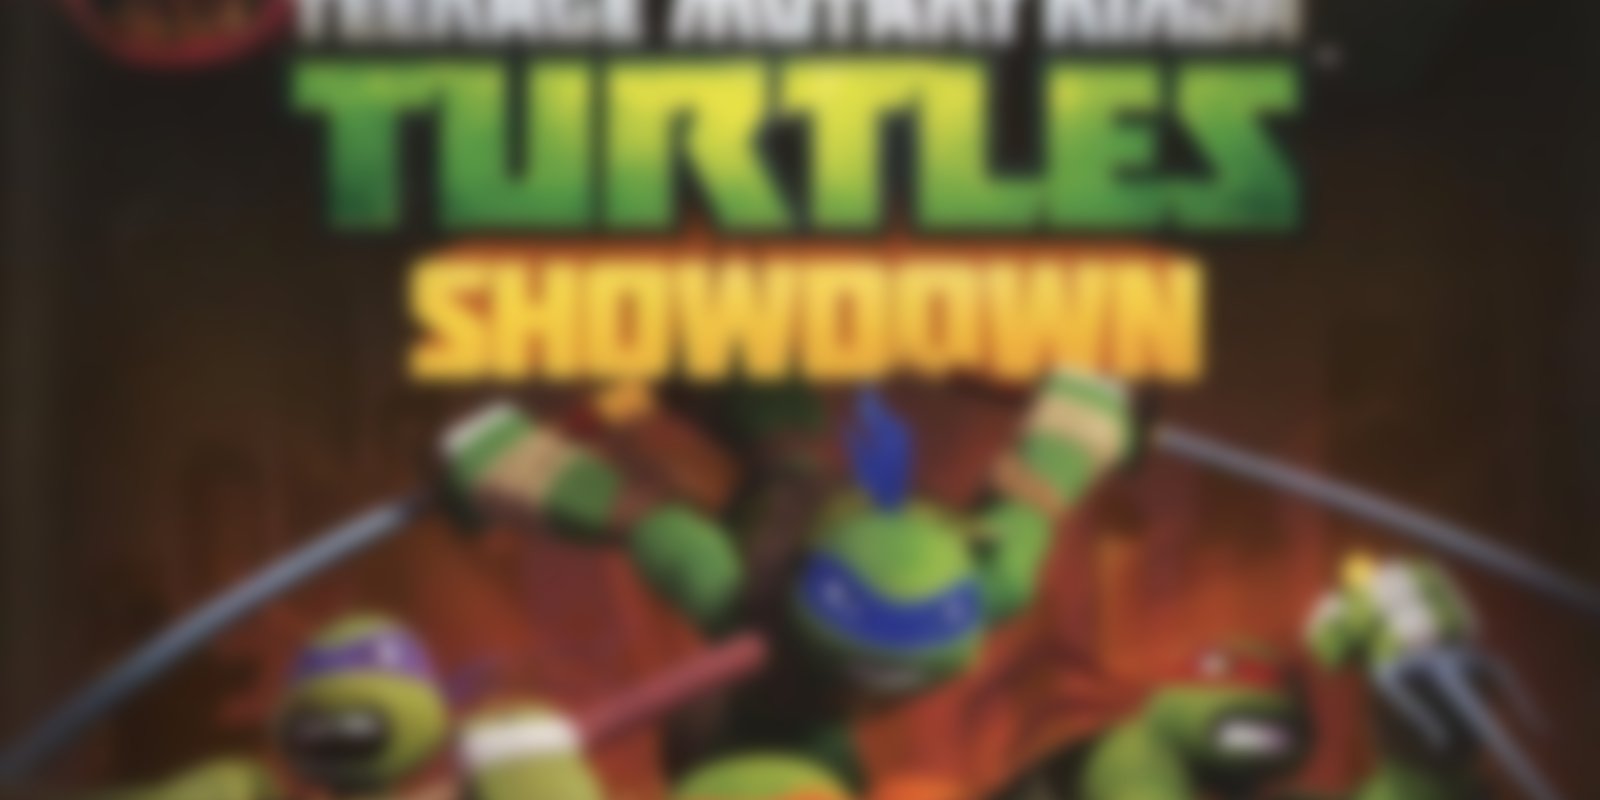 Teenage Mutant Ninja Turtles - Showdown